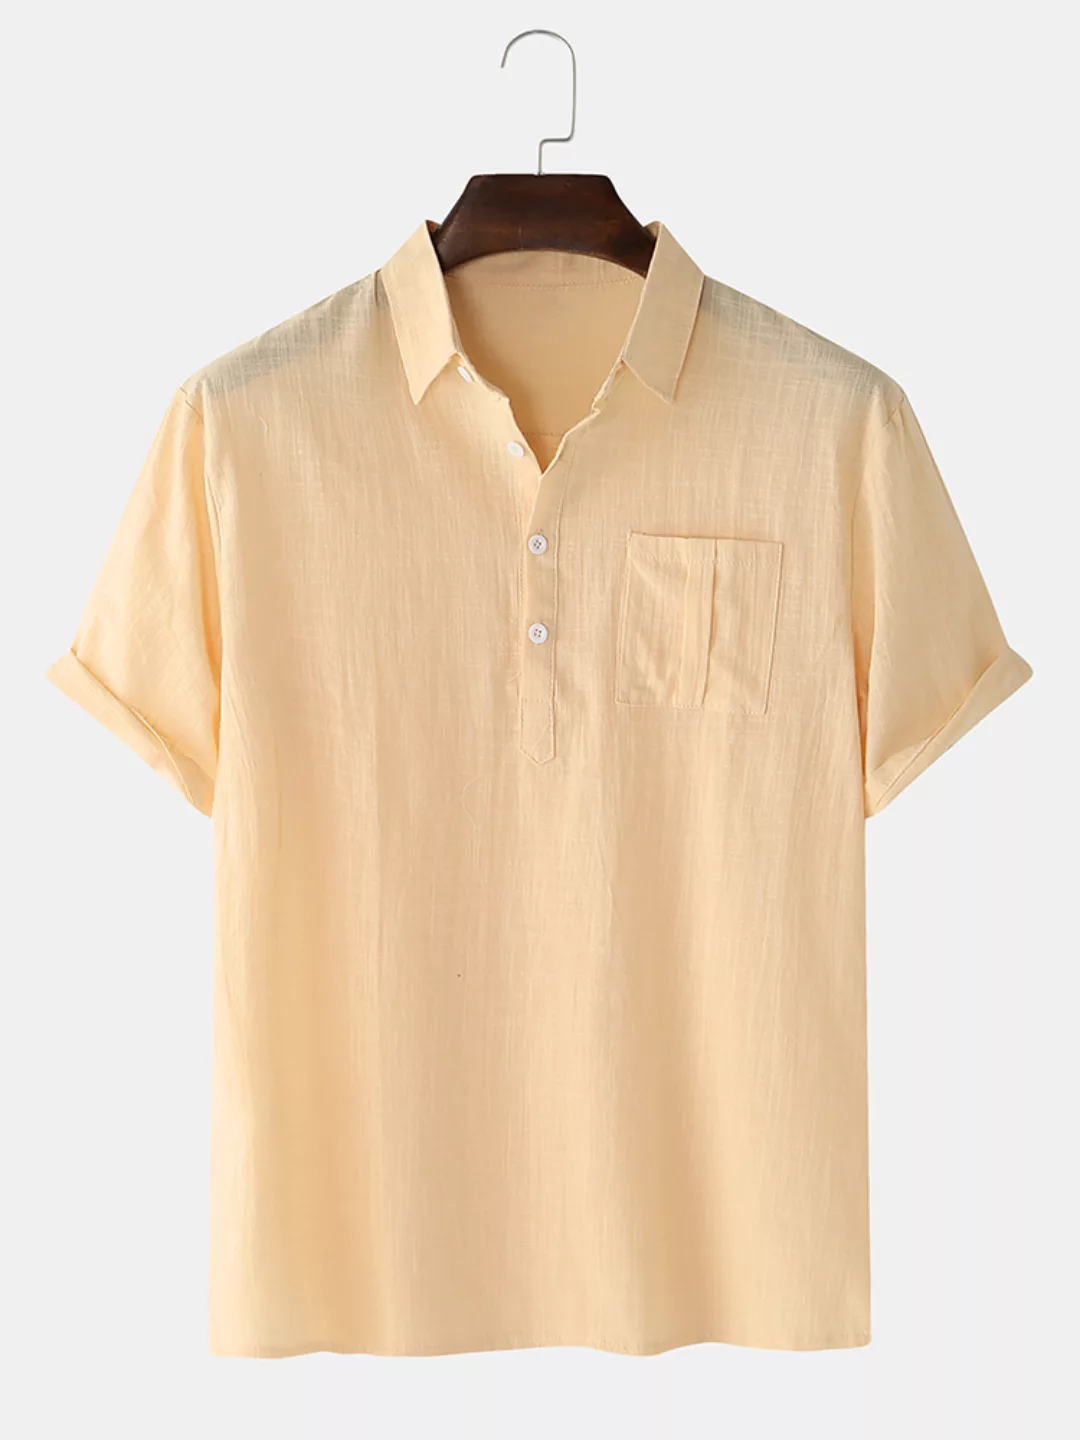 Herren Solid Color Light & Casual Brusttasche Revers Kragen Henley Shirts günstig online kaufen